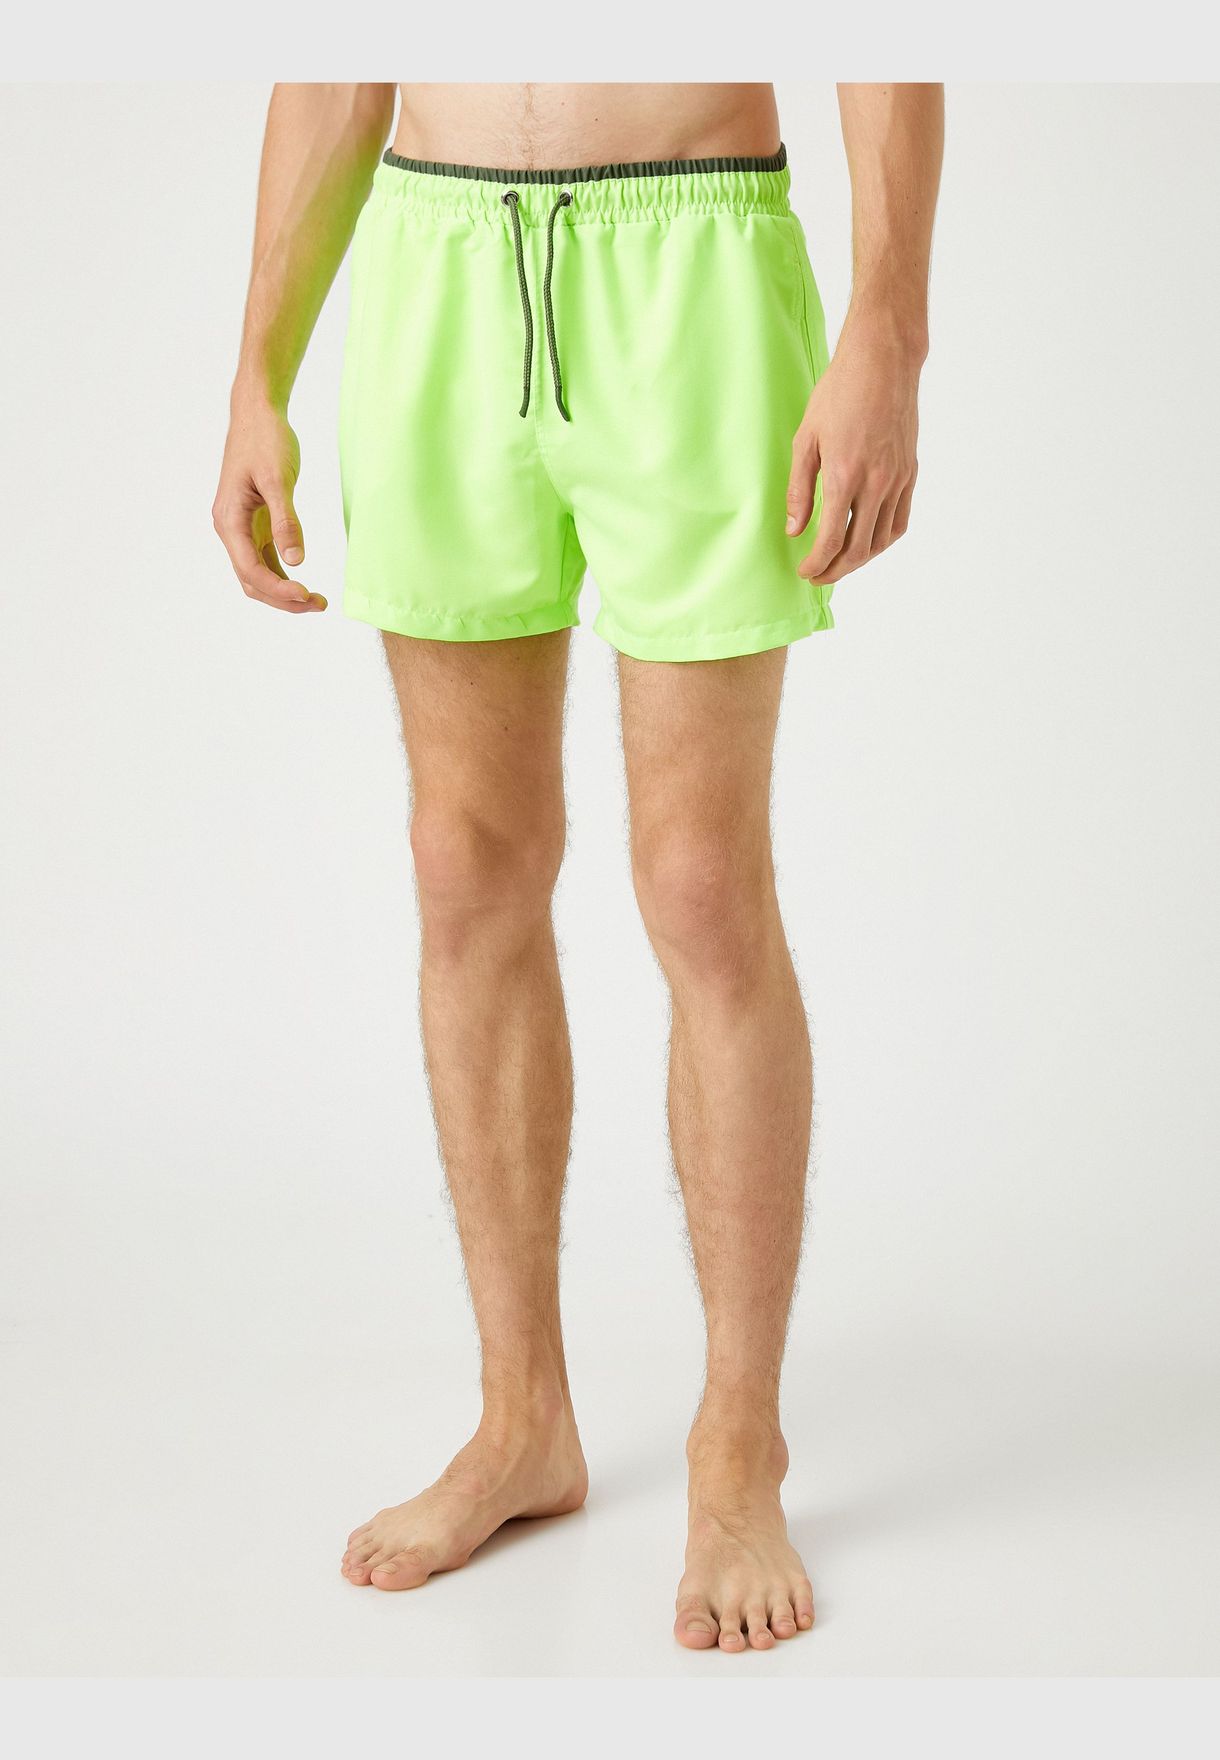 Patterned Sea Shorts